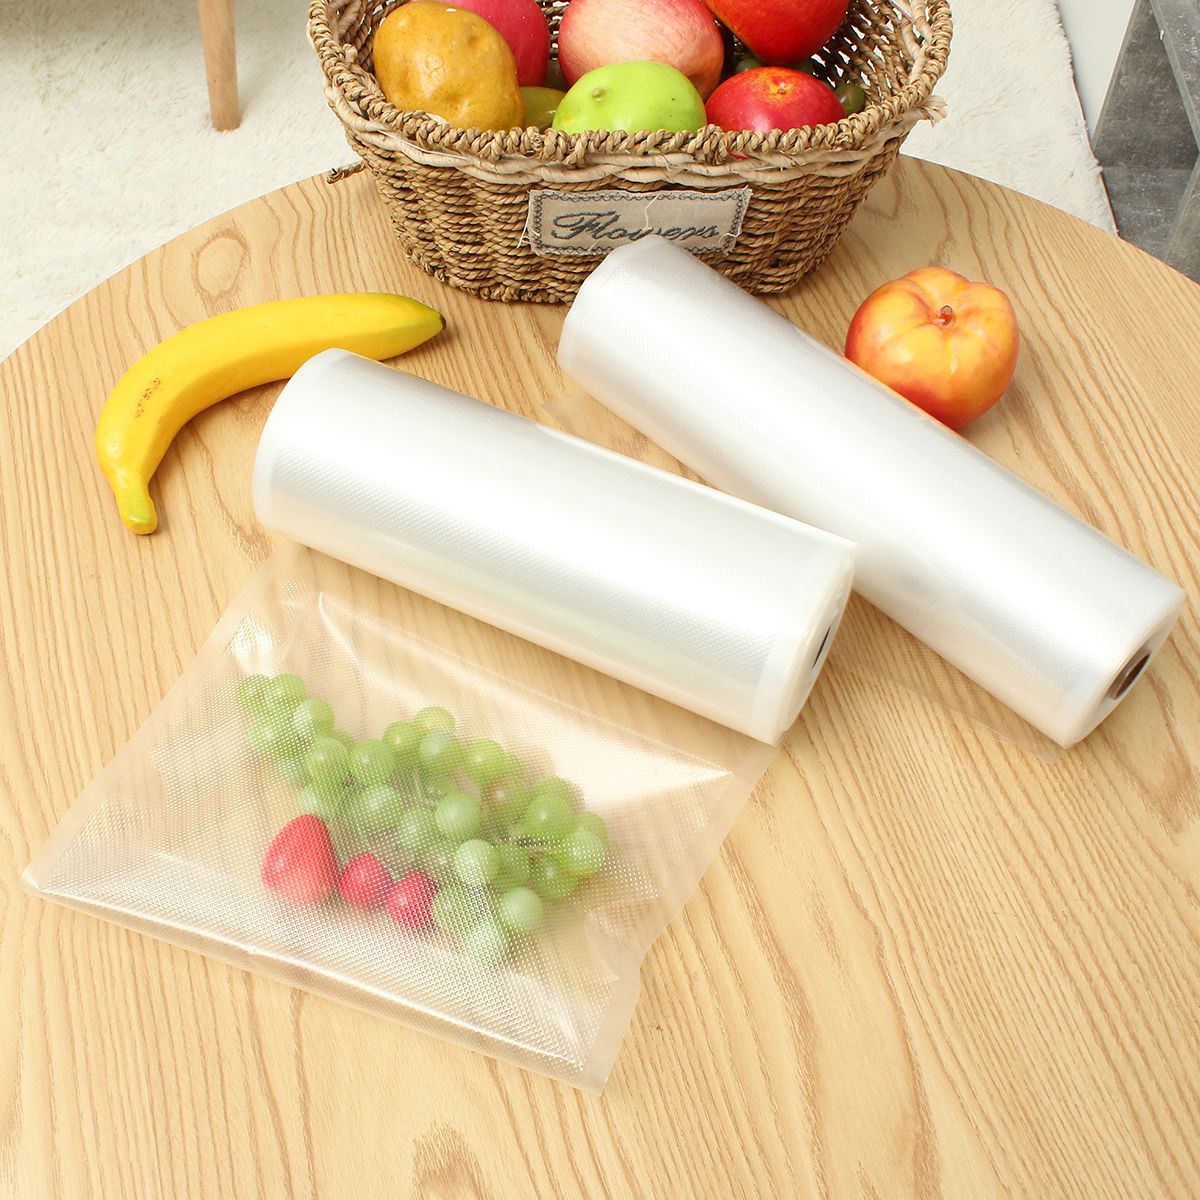 Vacuum-Bag-Food-Sealer-Rolls-Saver-Bag-Seal-Storage-Fresh-Keeping-Cooked-Food-1698417